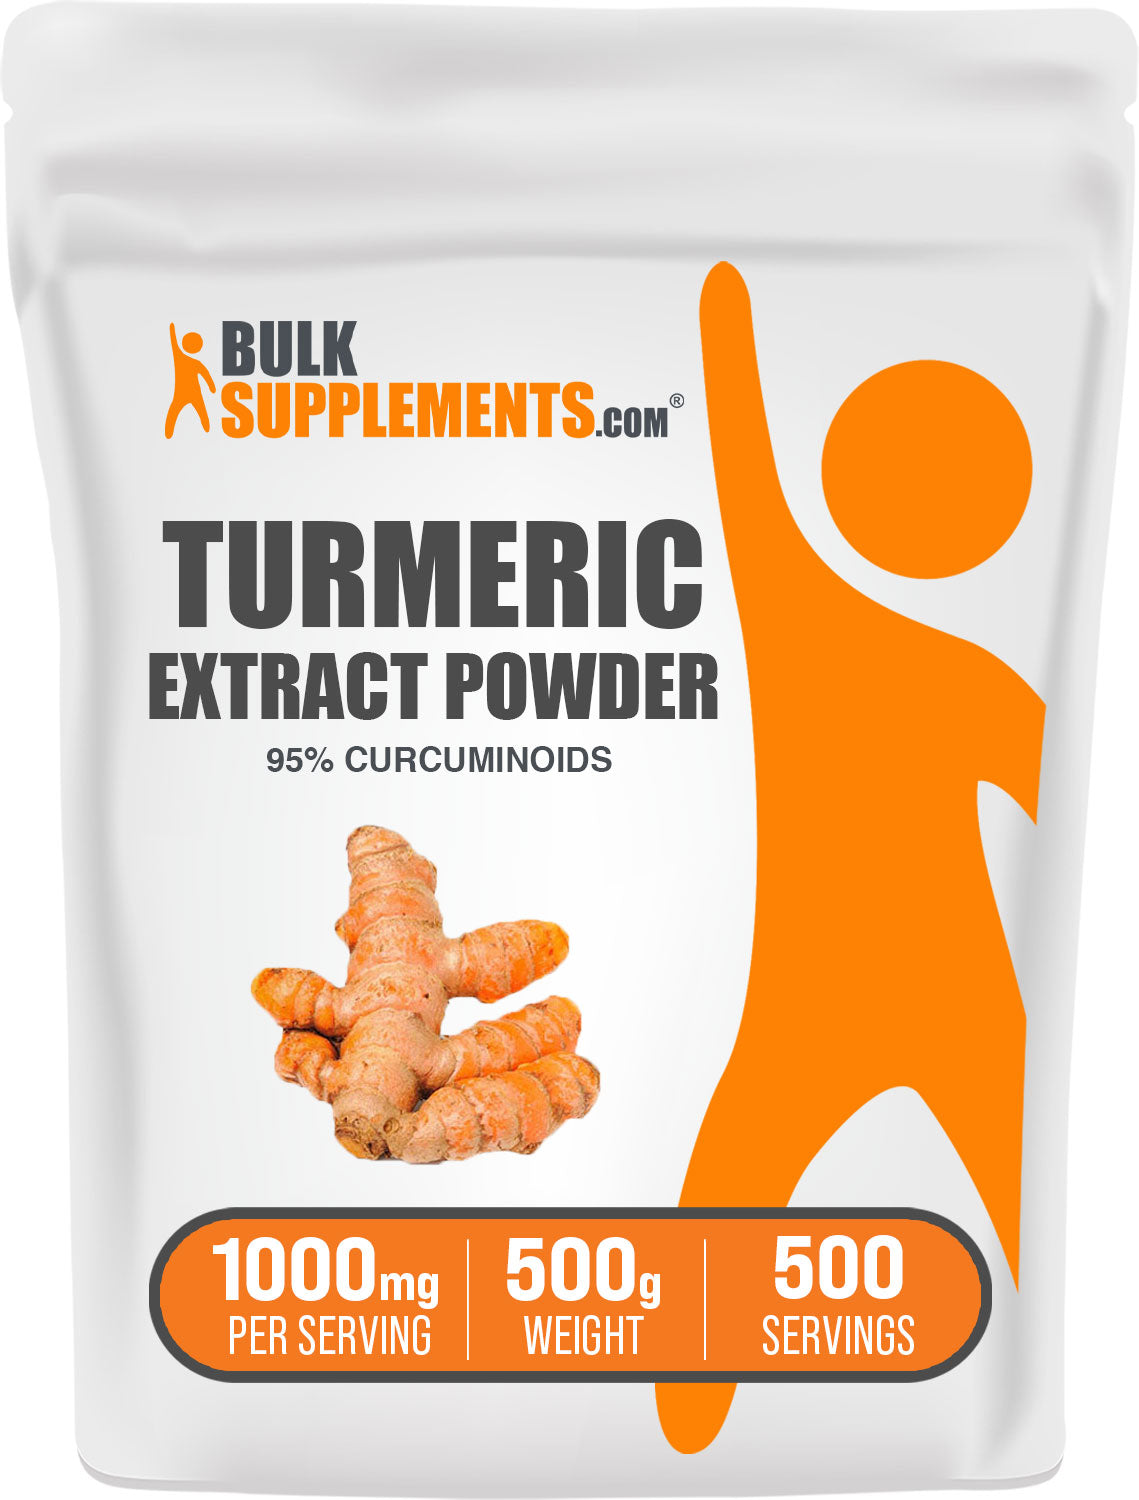 BulkSupplements Turmeric Extract Powder 95% Curcuminoids 500g bag